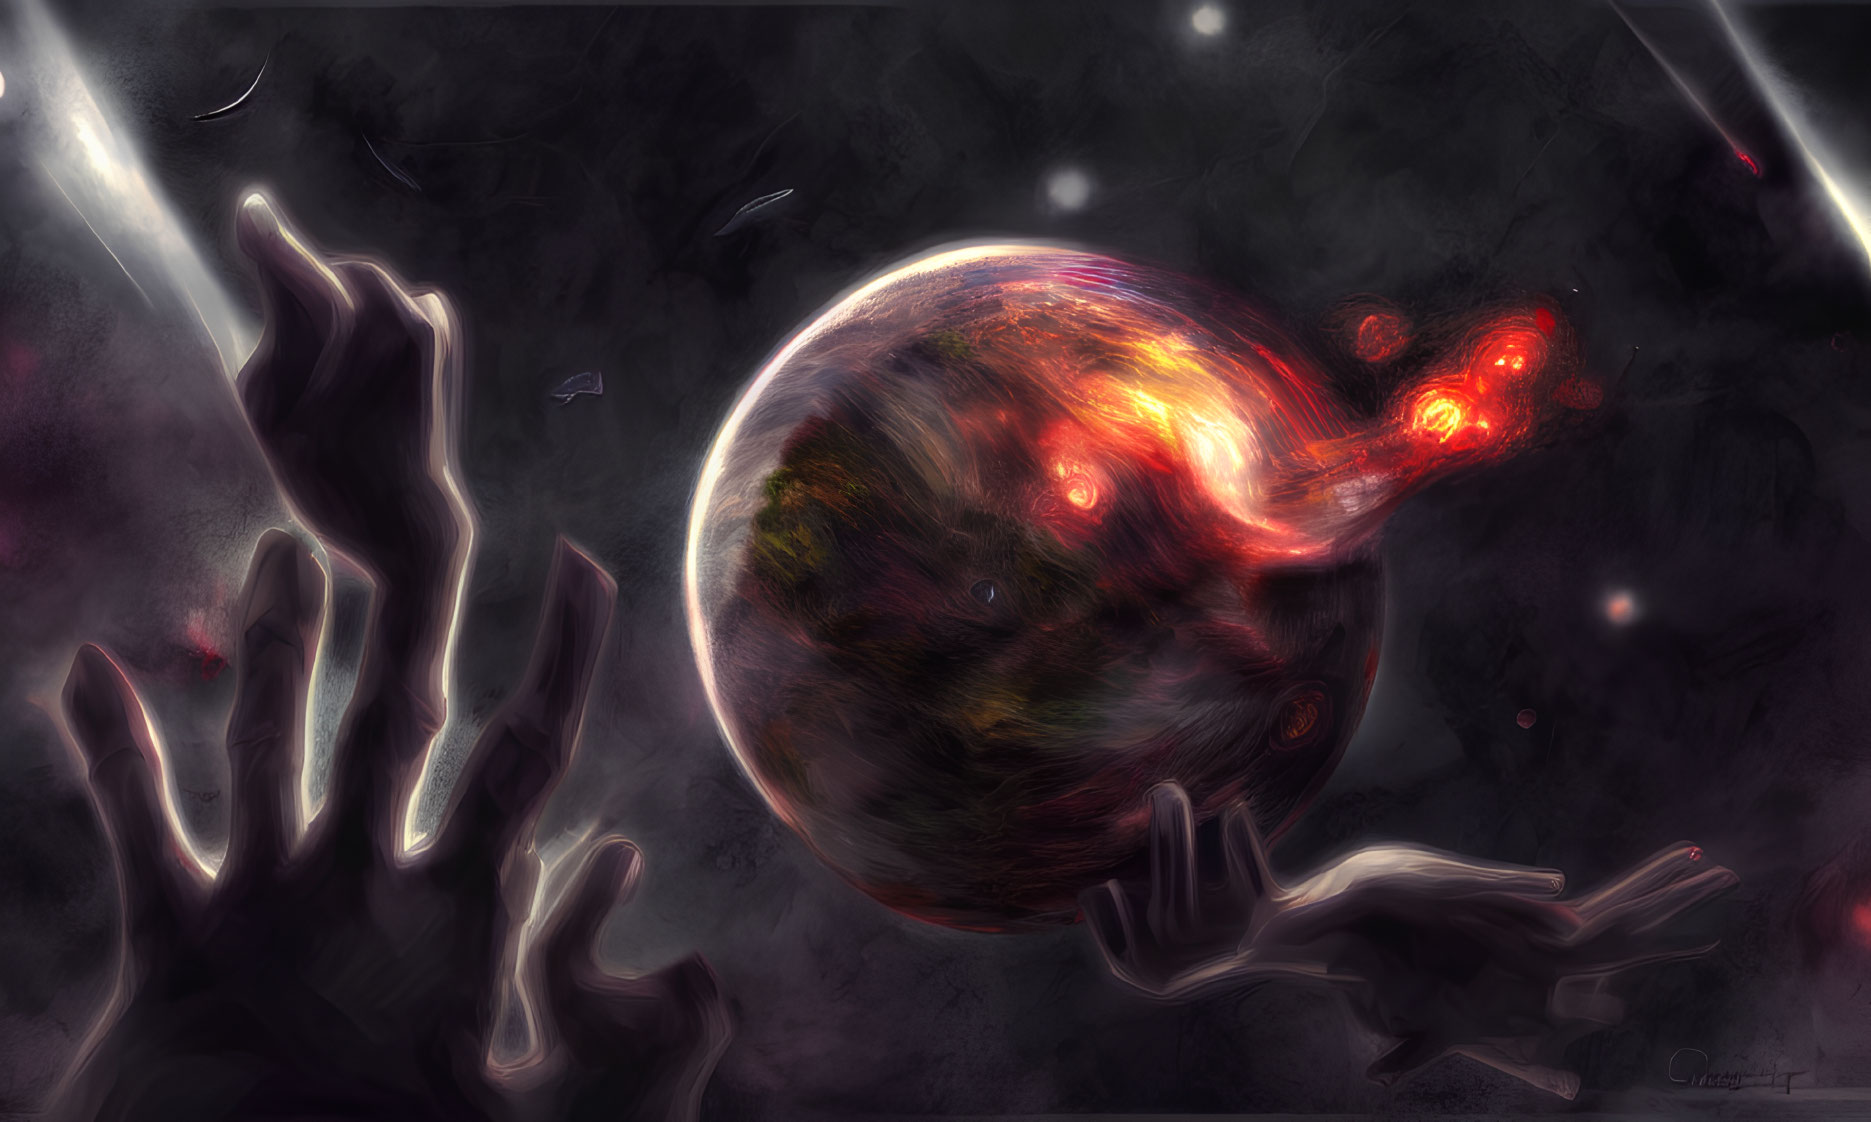 Silhouetted hands reaching fiery planet in cosmic scene